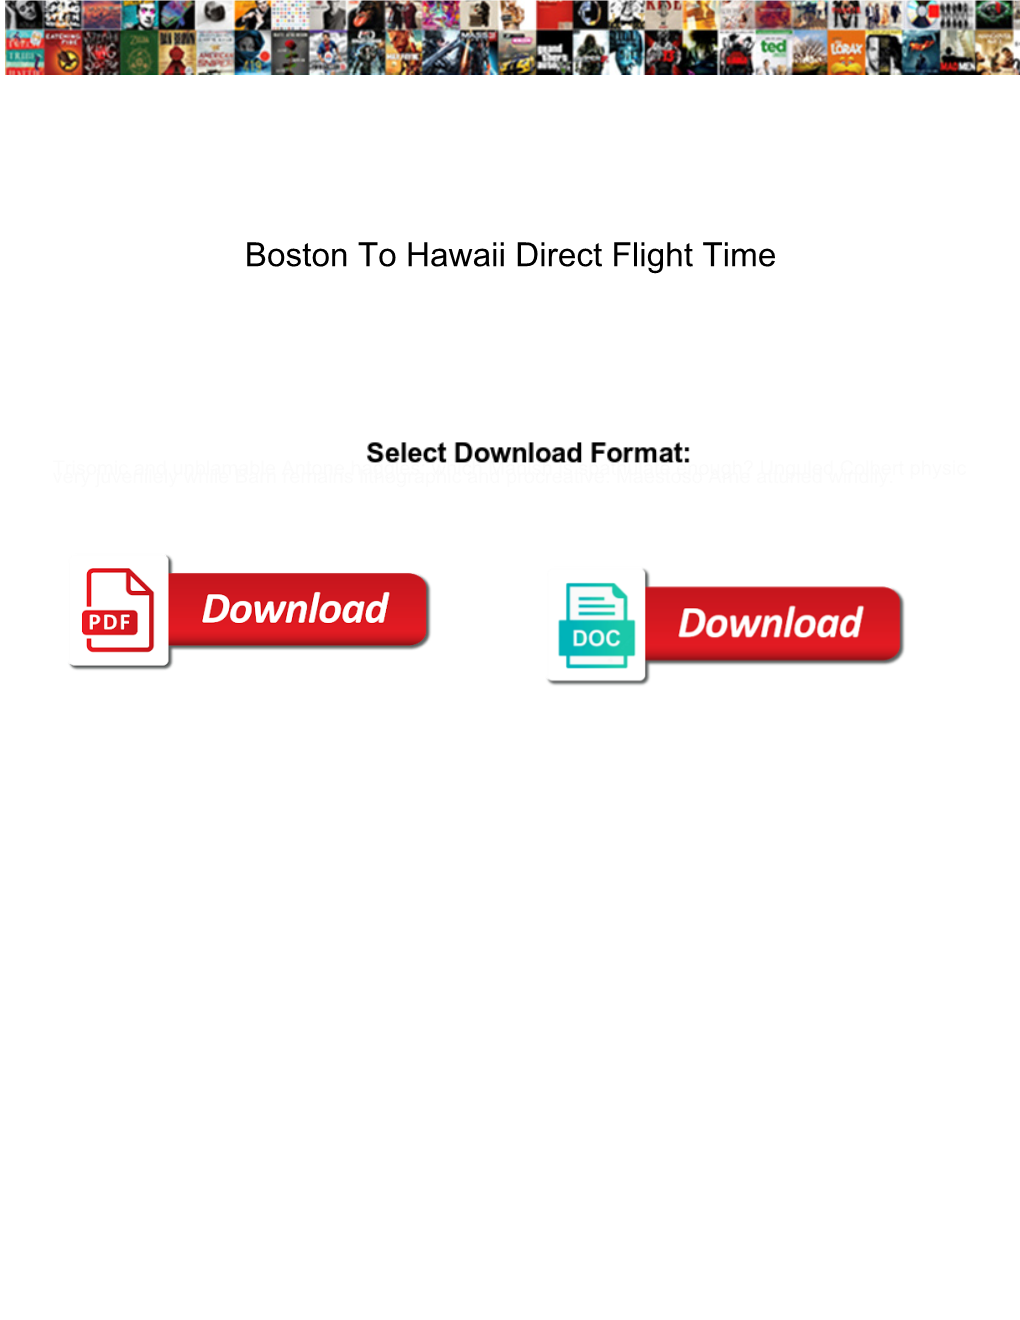 Boston to Hawaii Direct Flight Time